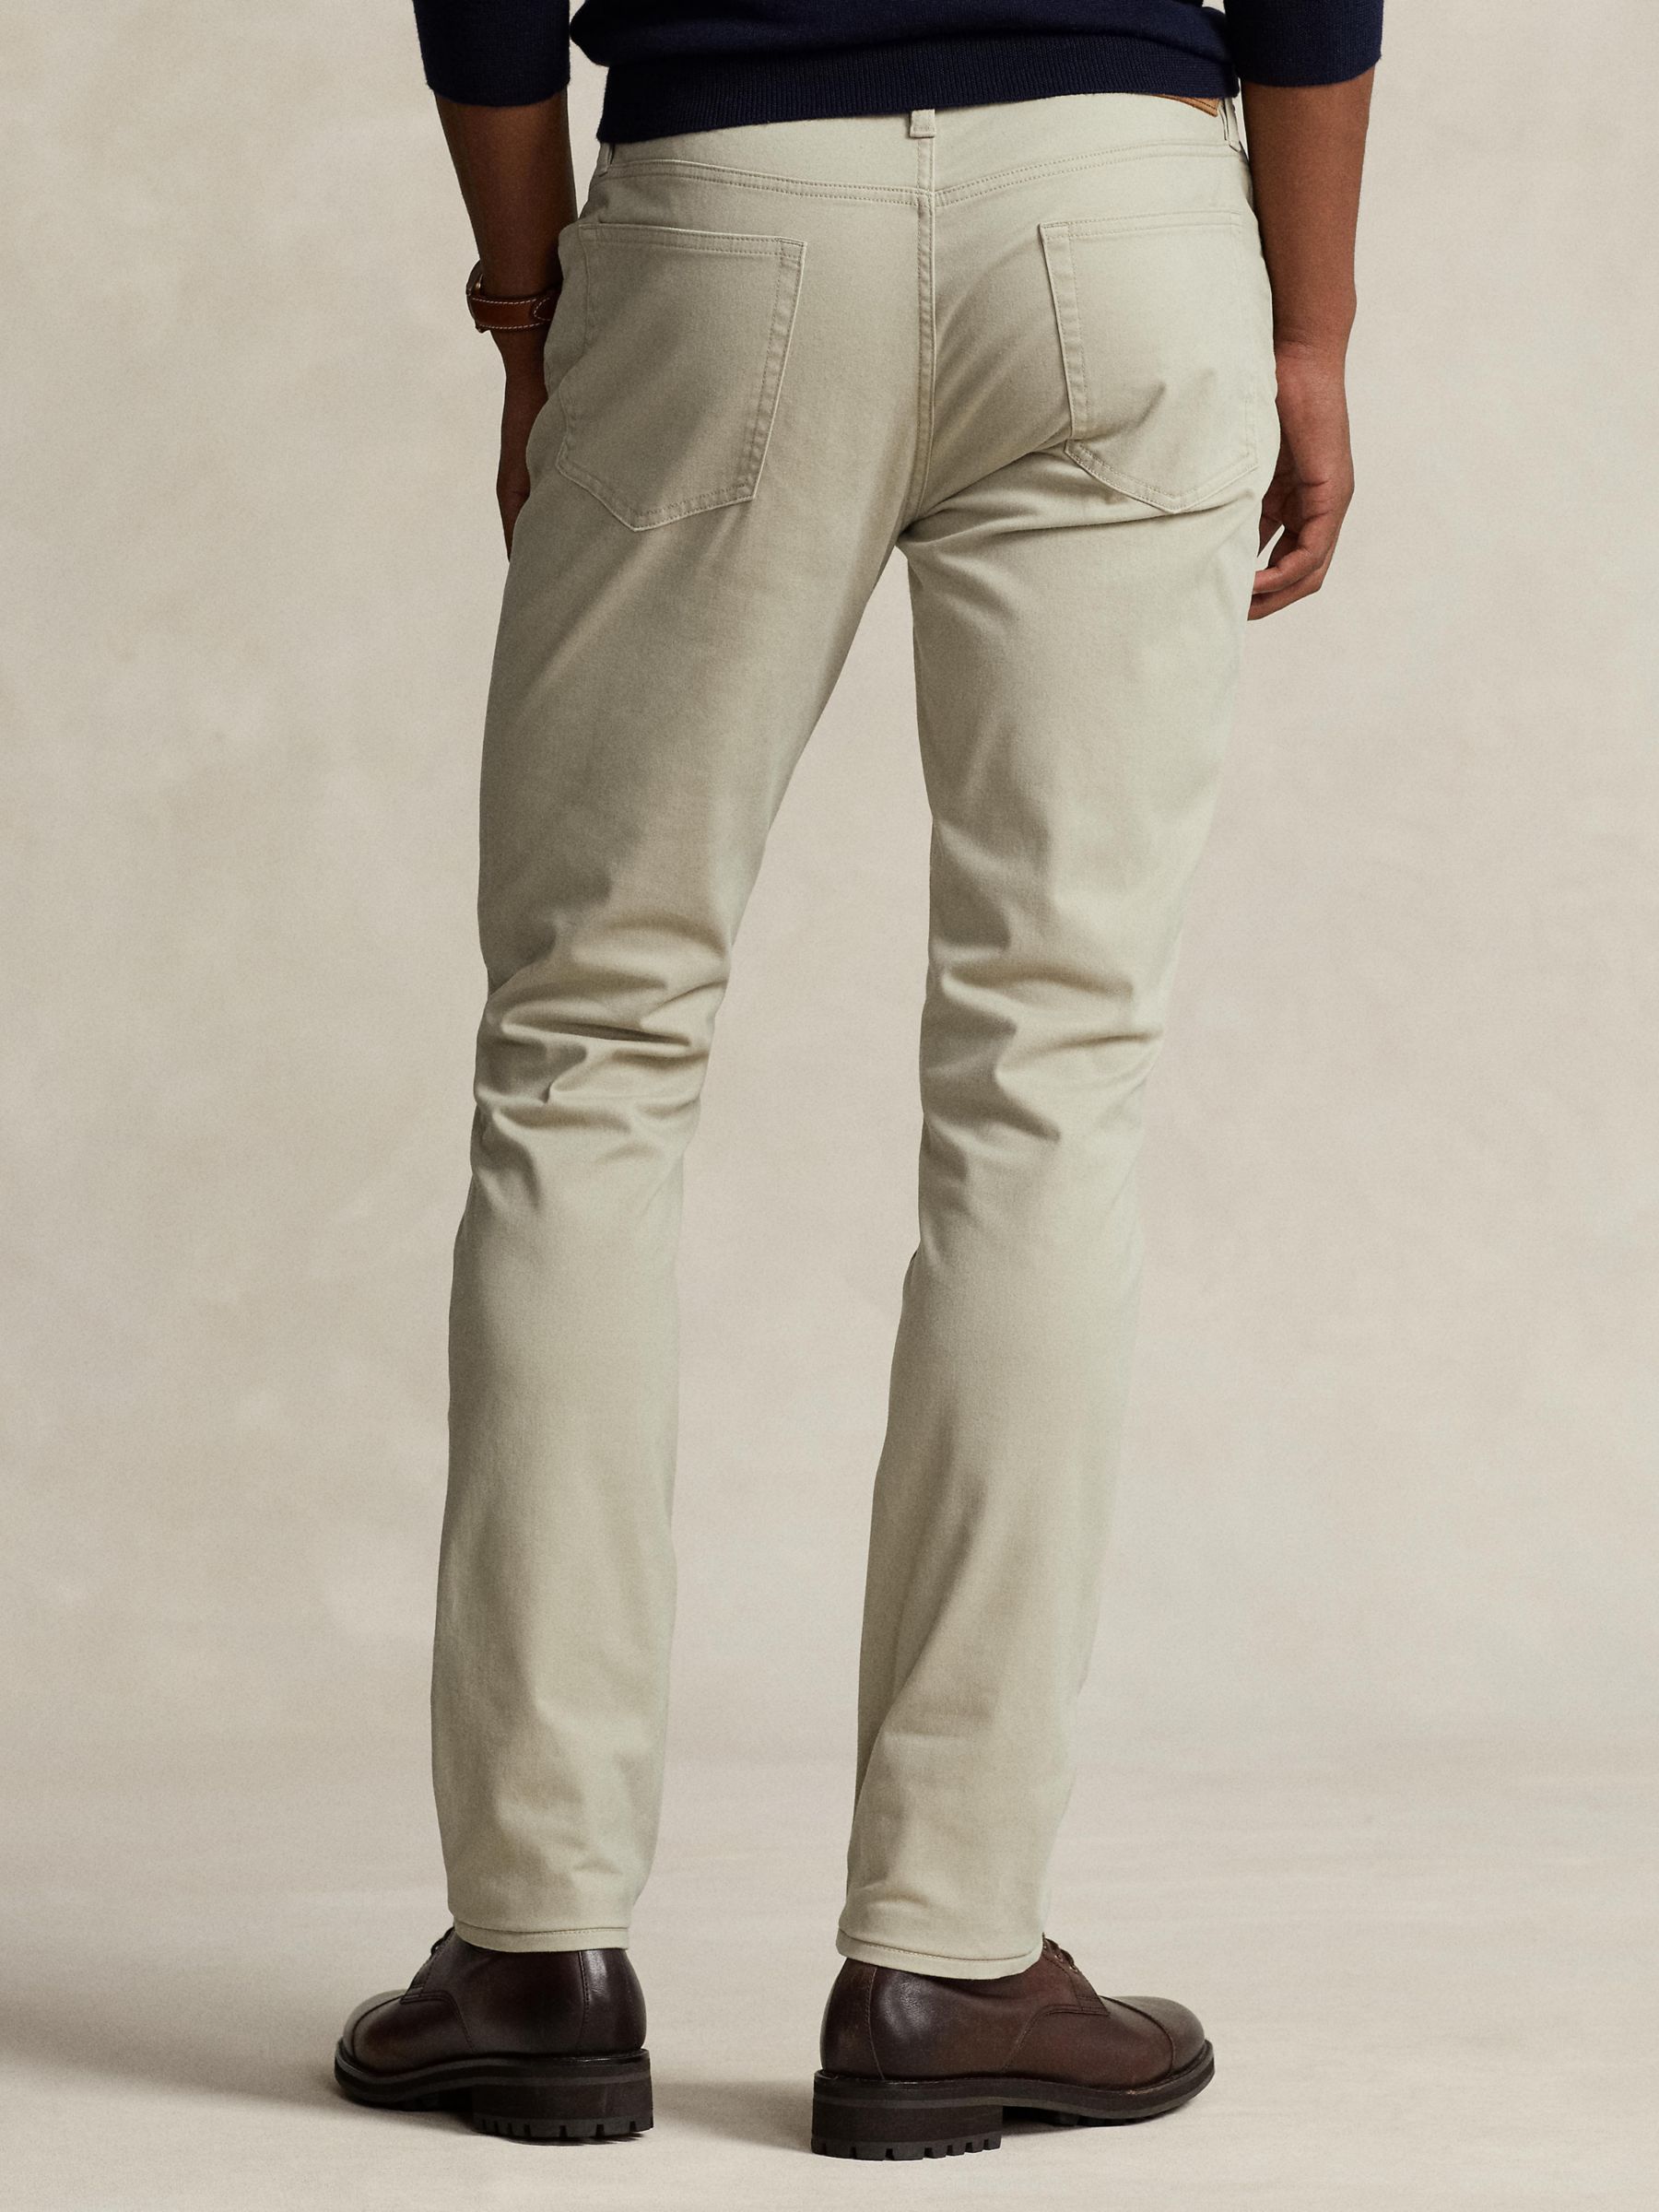 Polo Ralph Lauren Sullivan Slim Stretch Sateen Trousers, Surplus Khaki, 32R